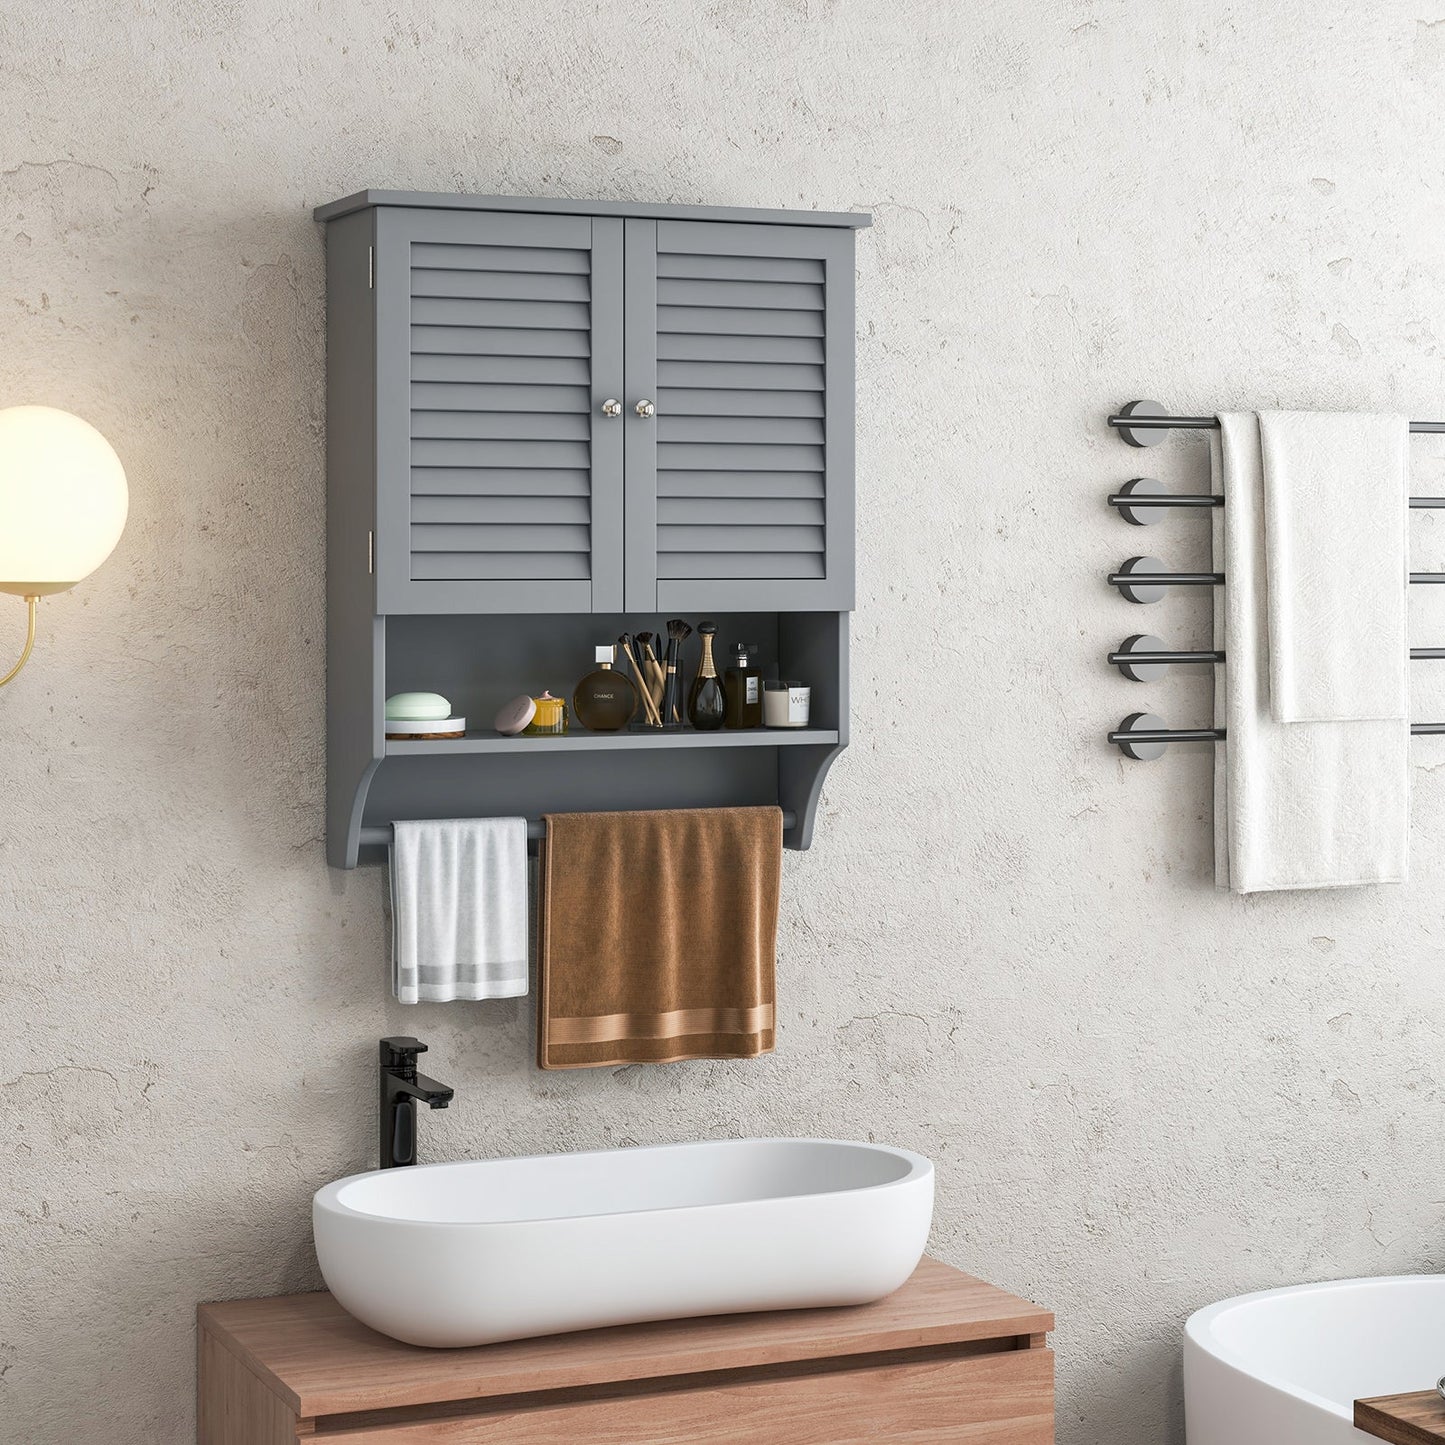 Bathroom Wall Cabinet with 2 Doors and 3-Position Adjustable Shelf-Grey